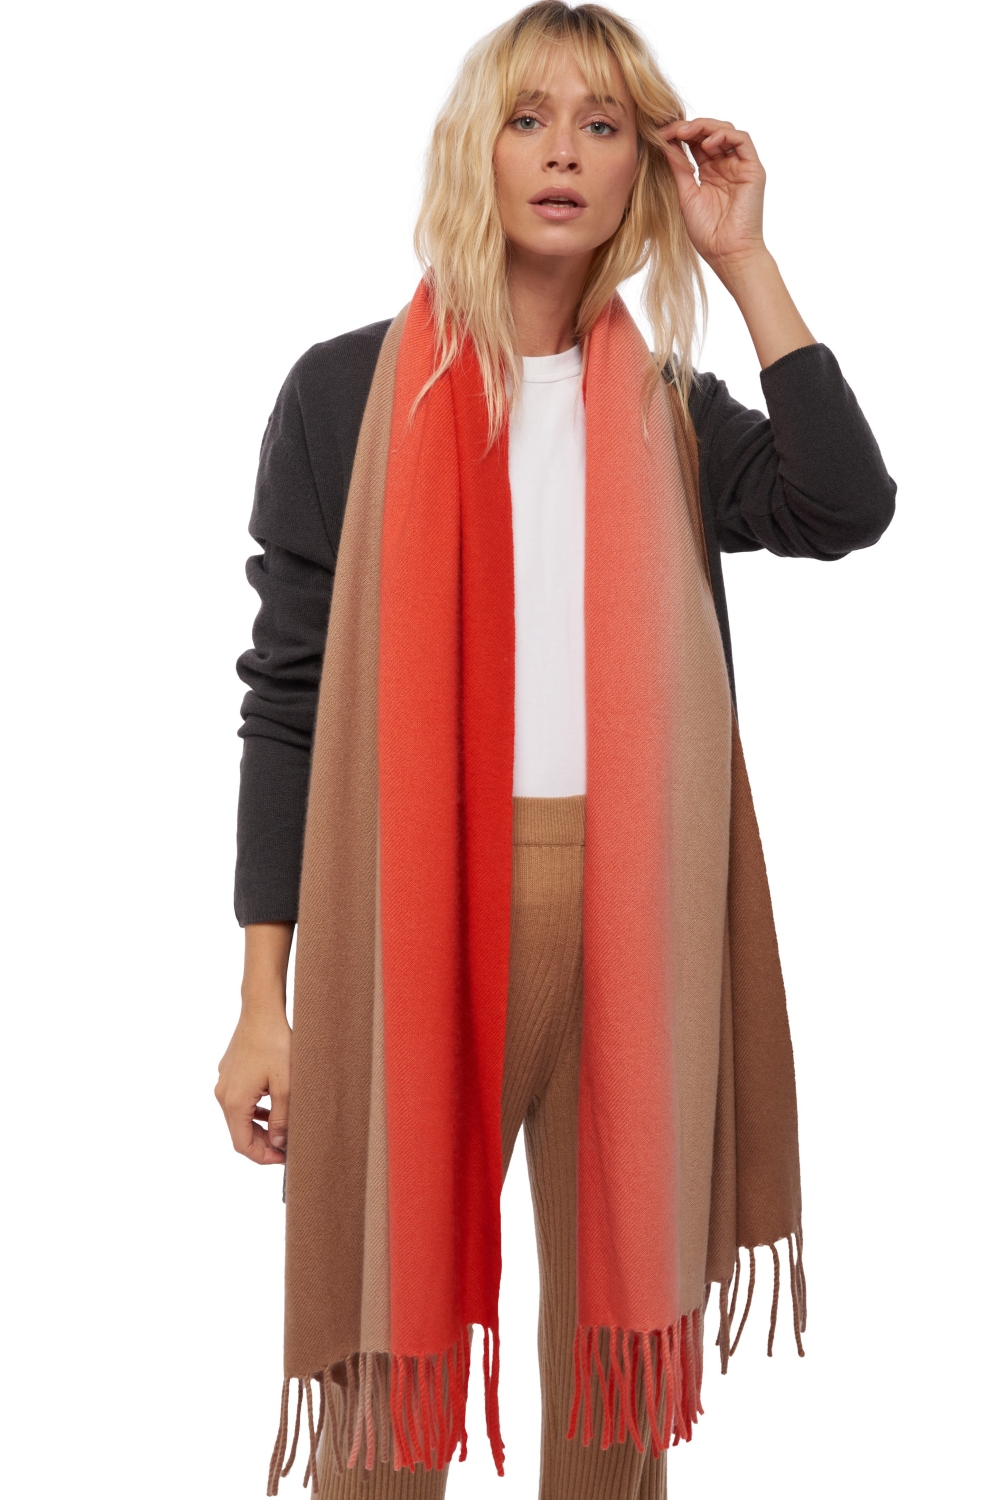 Cashmere ladies scarves mufflers vaasa bloody orange camel chine 200 x 70 cm